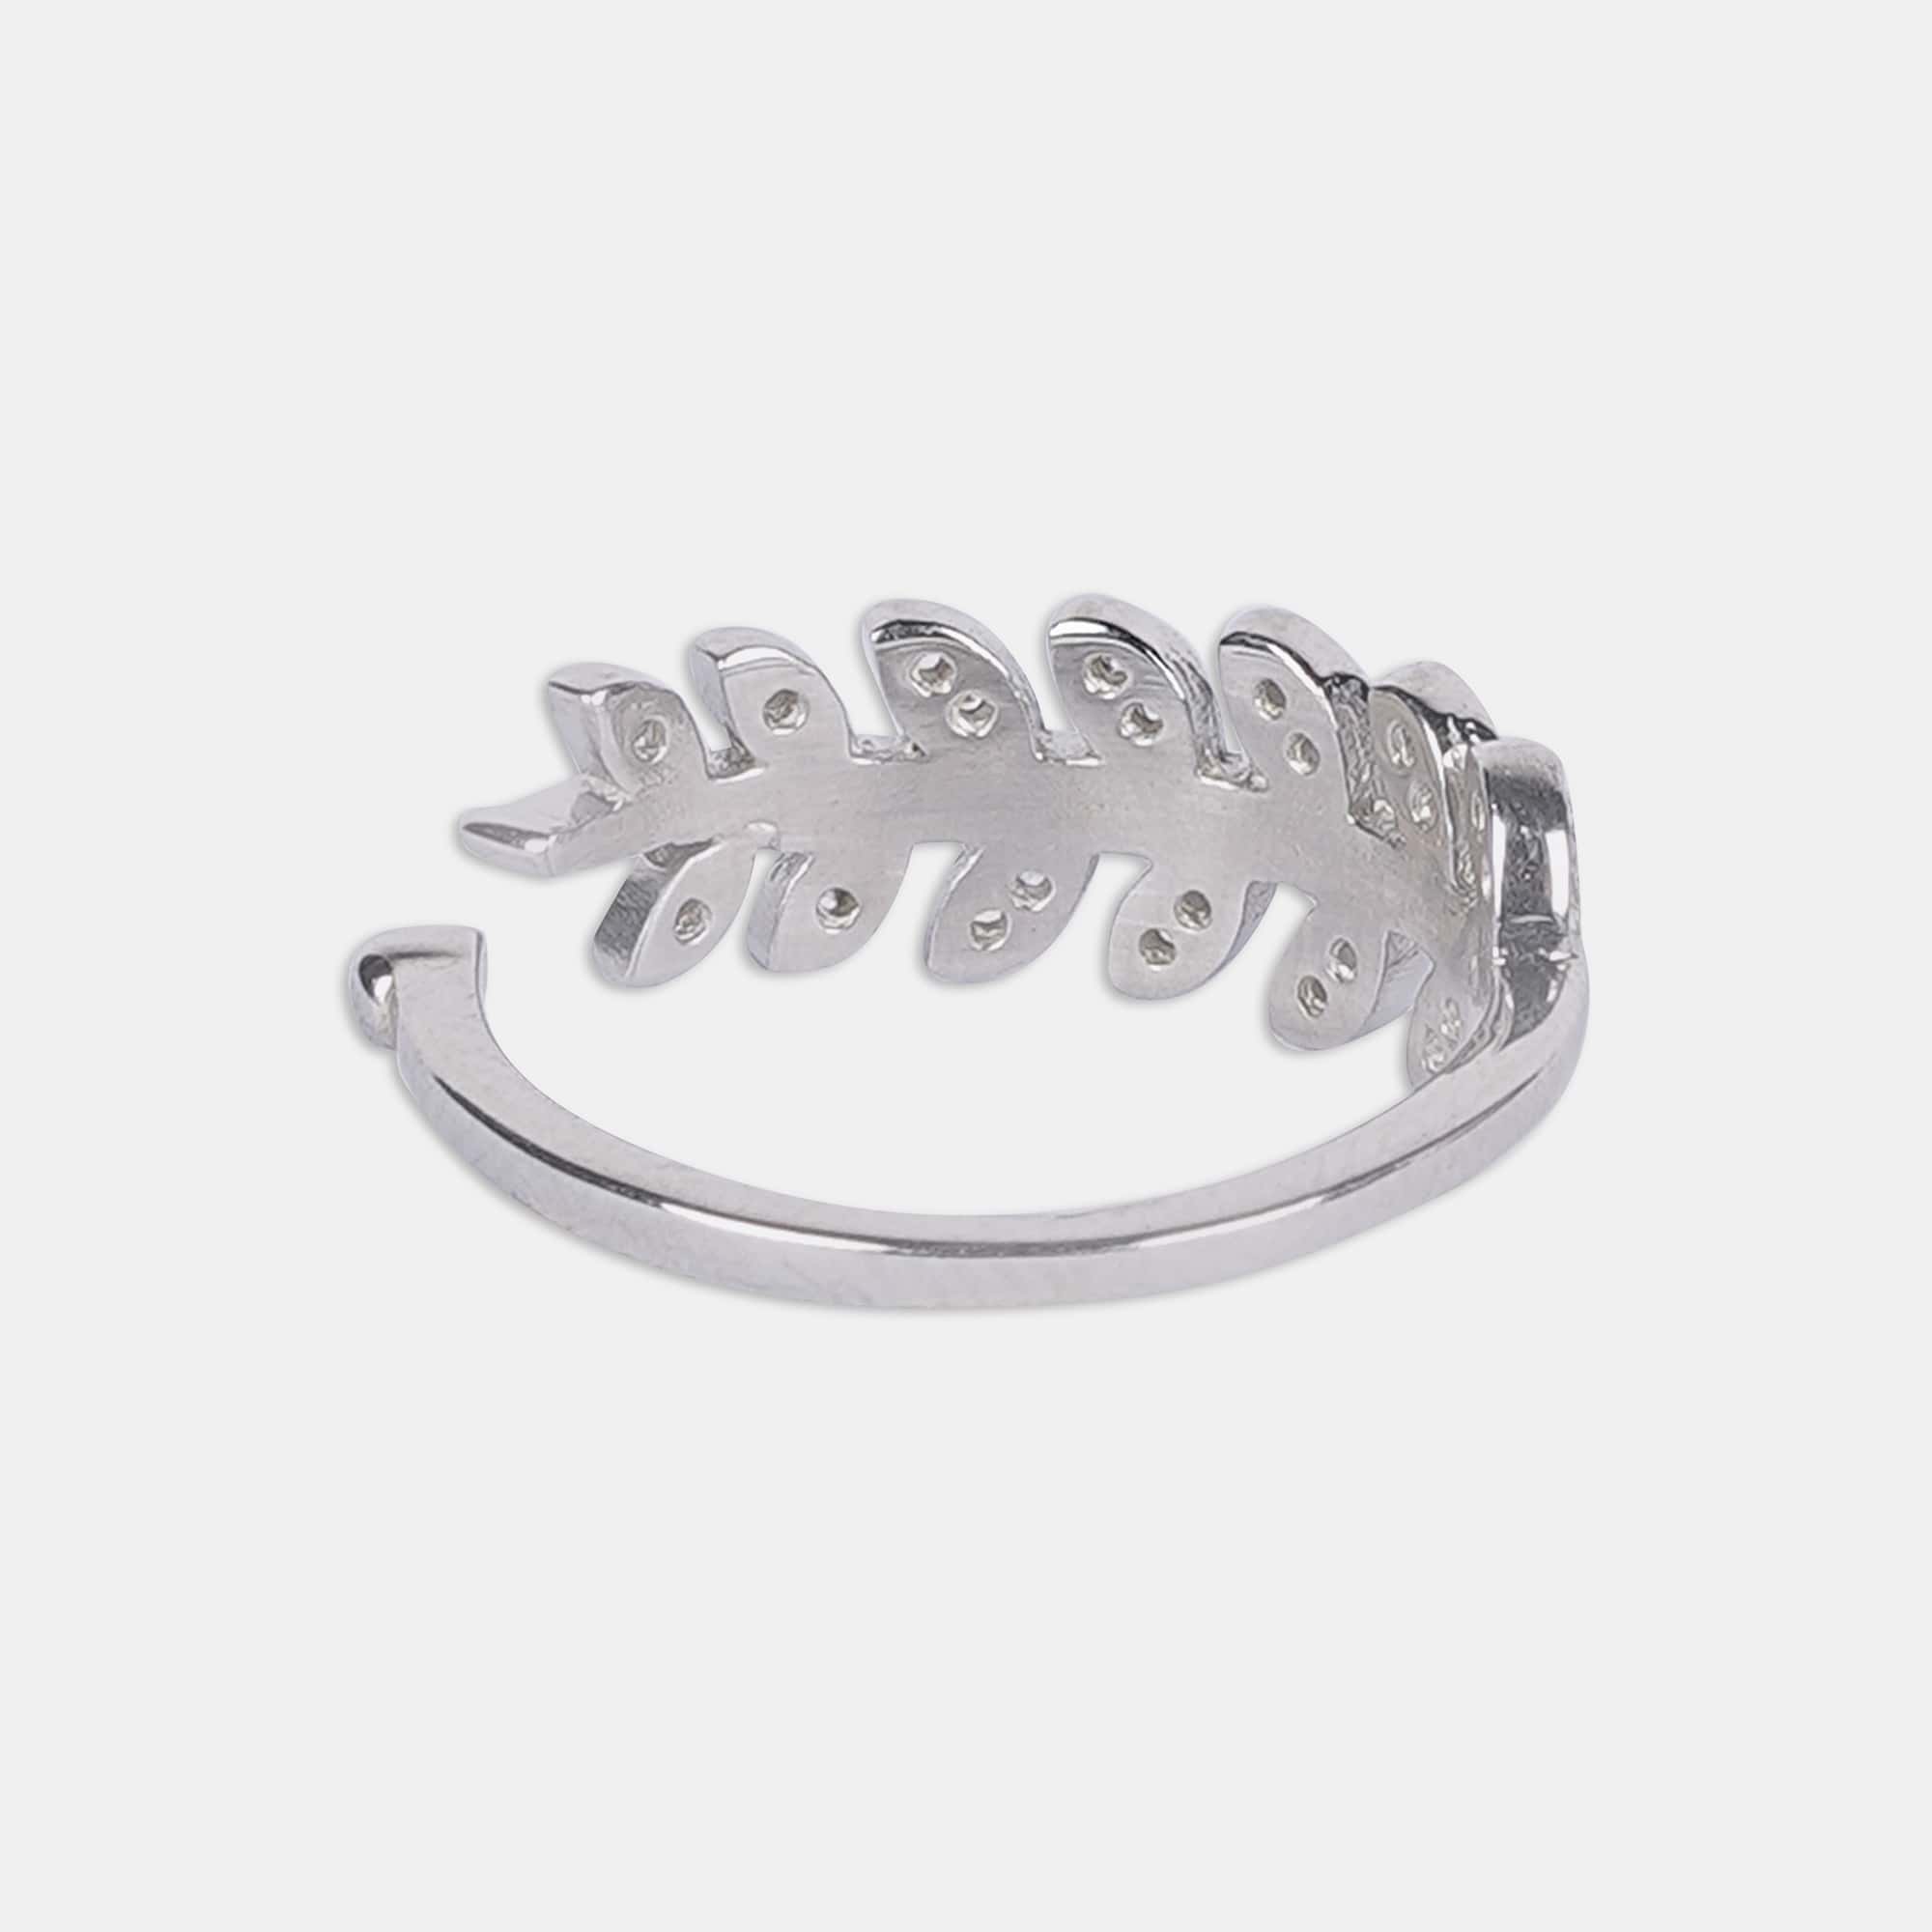 Ornul silver leafy elegance ring made with 925 silver